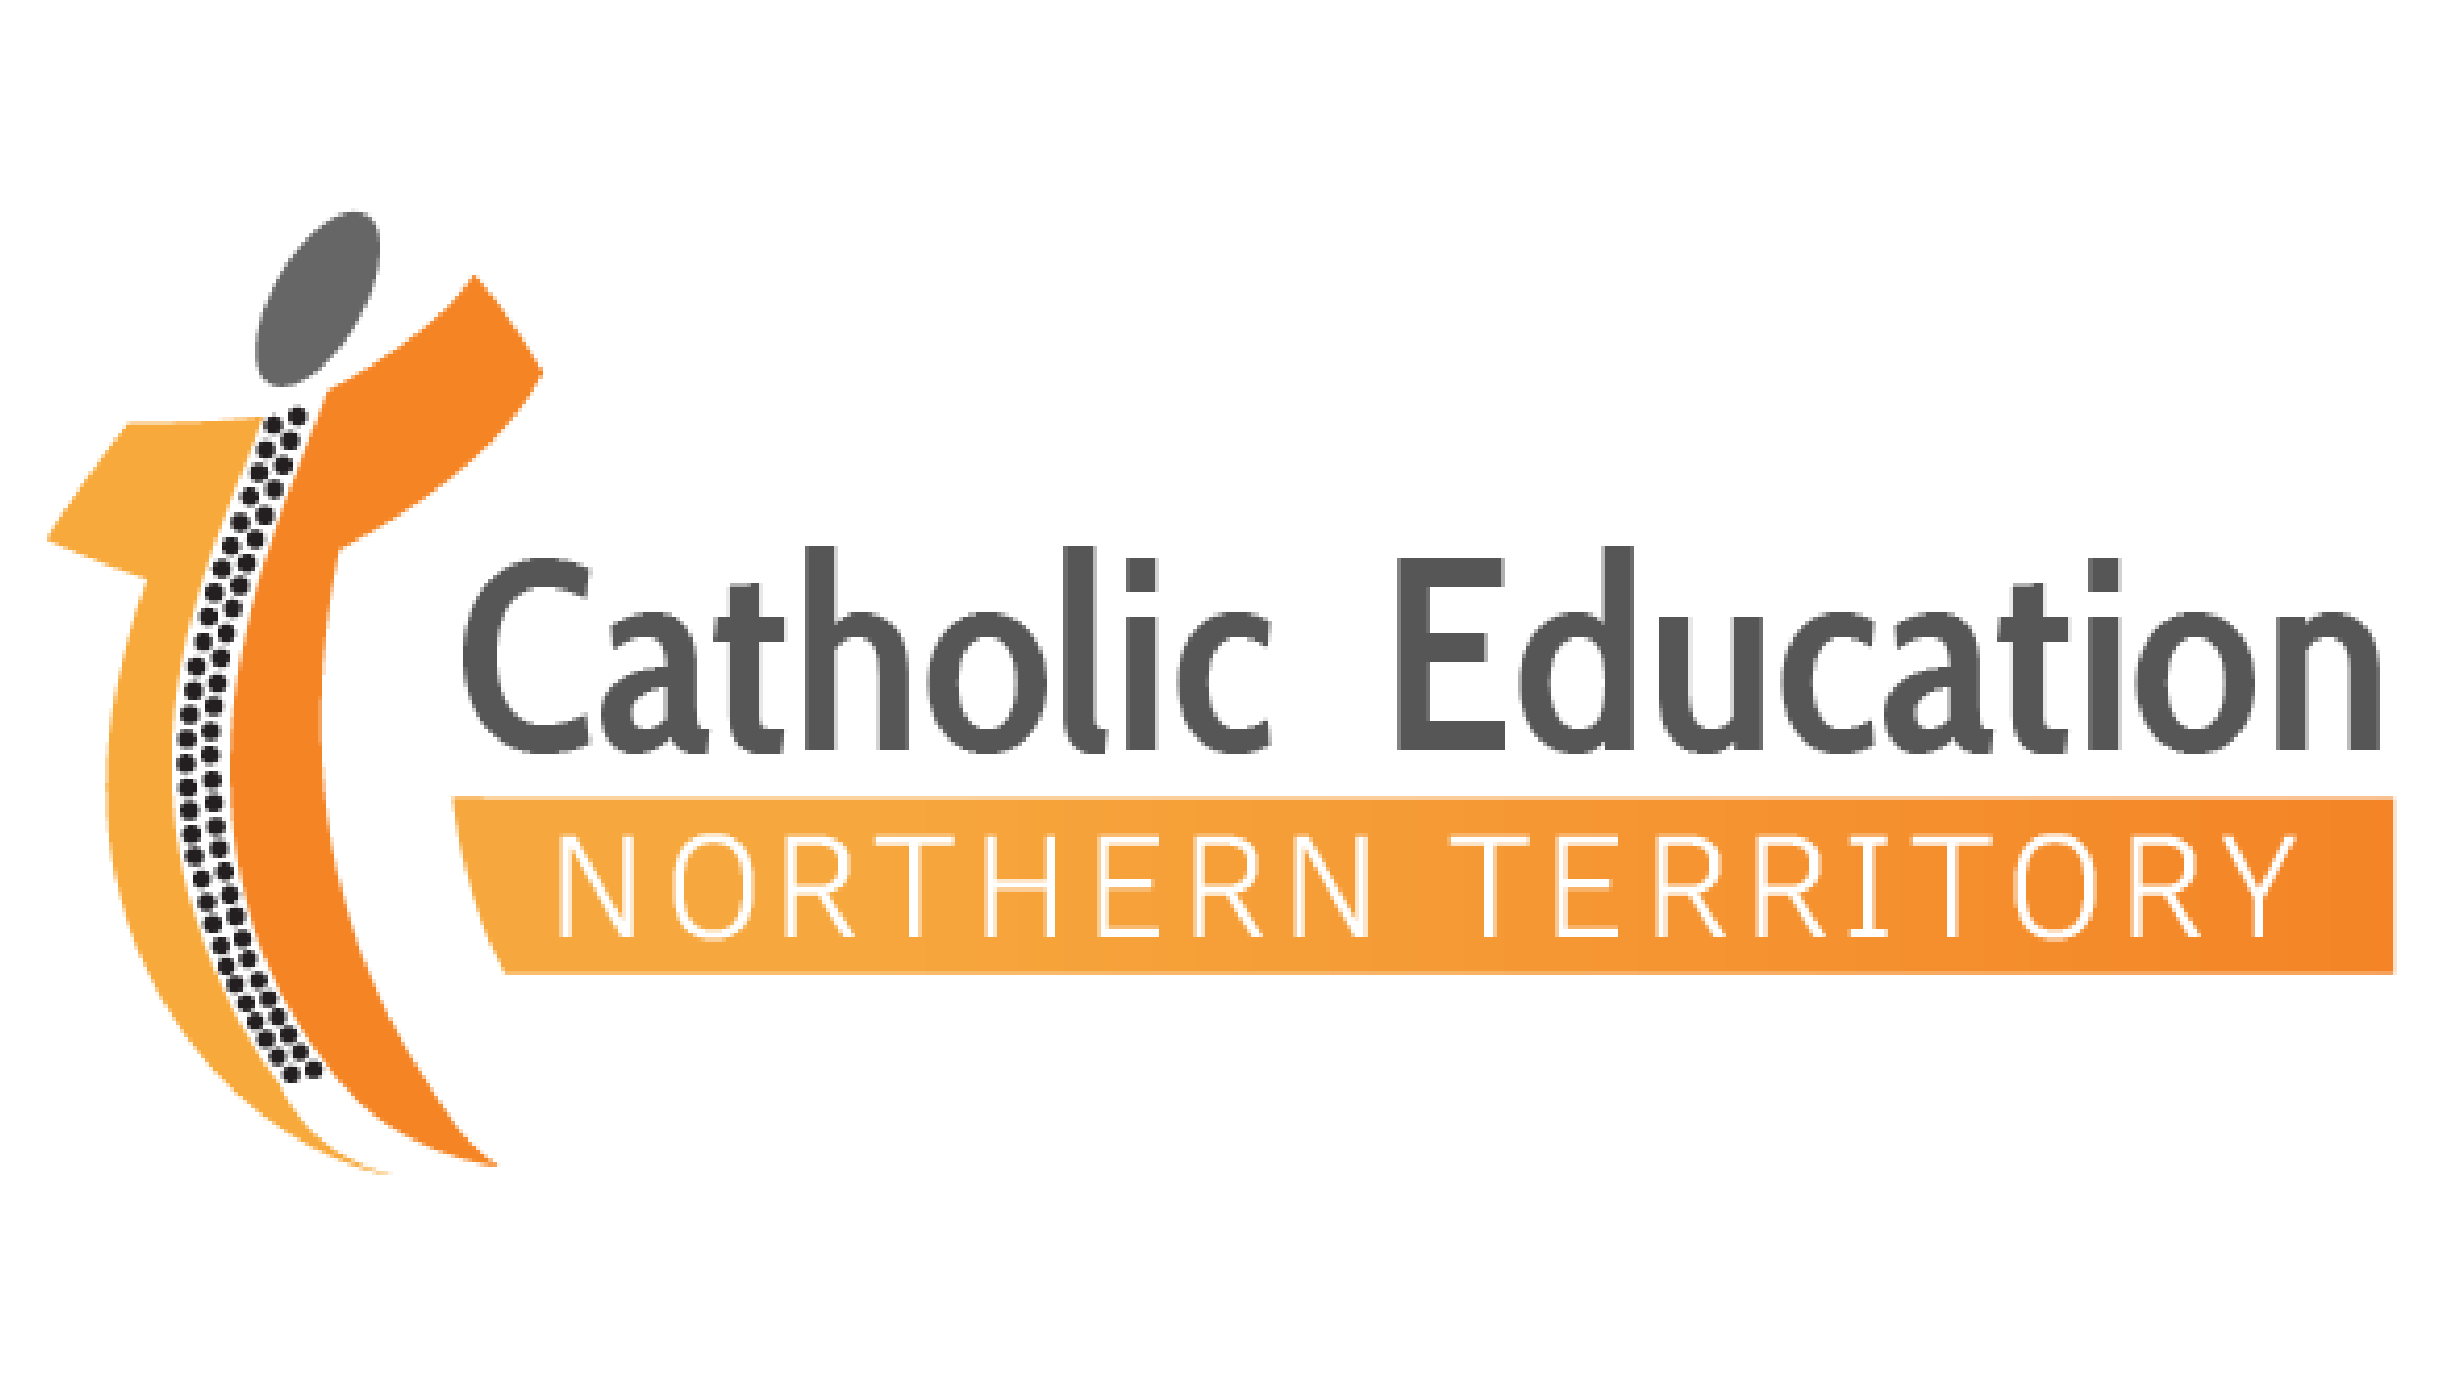 Sponsor - Outstanding Education and Care Program - Catholic Education